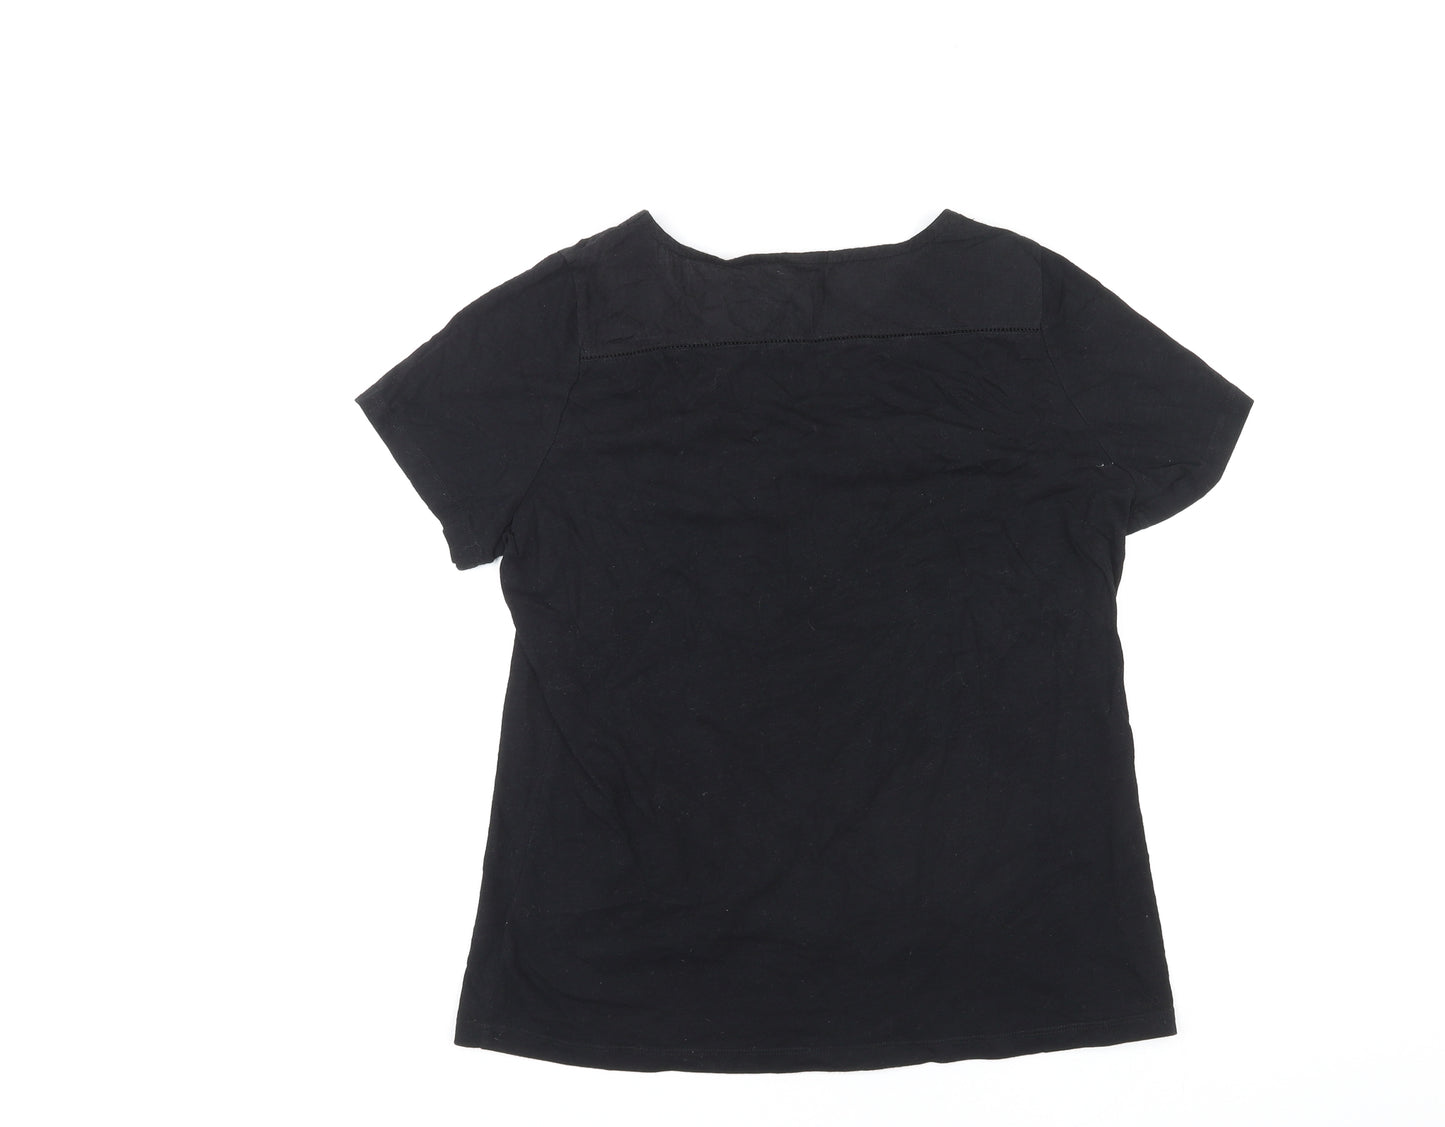 White Stuff Womens Black Cotton Basic T-Shirt Size 14 Round Neck